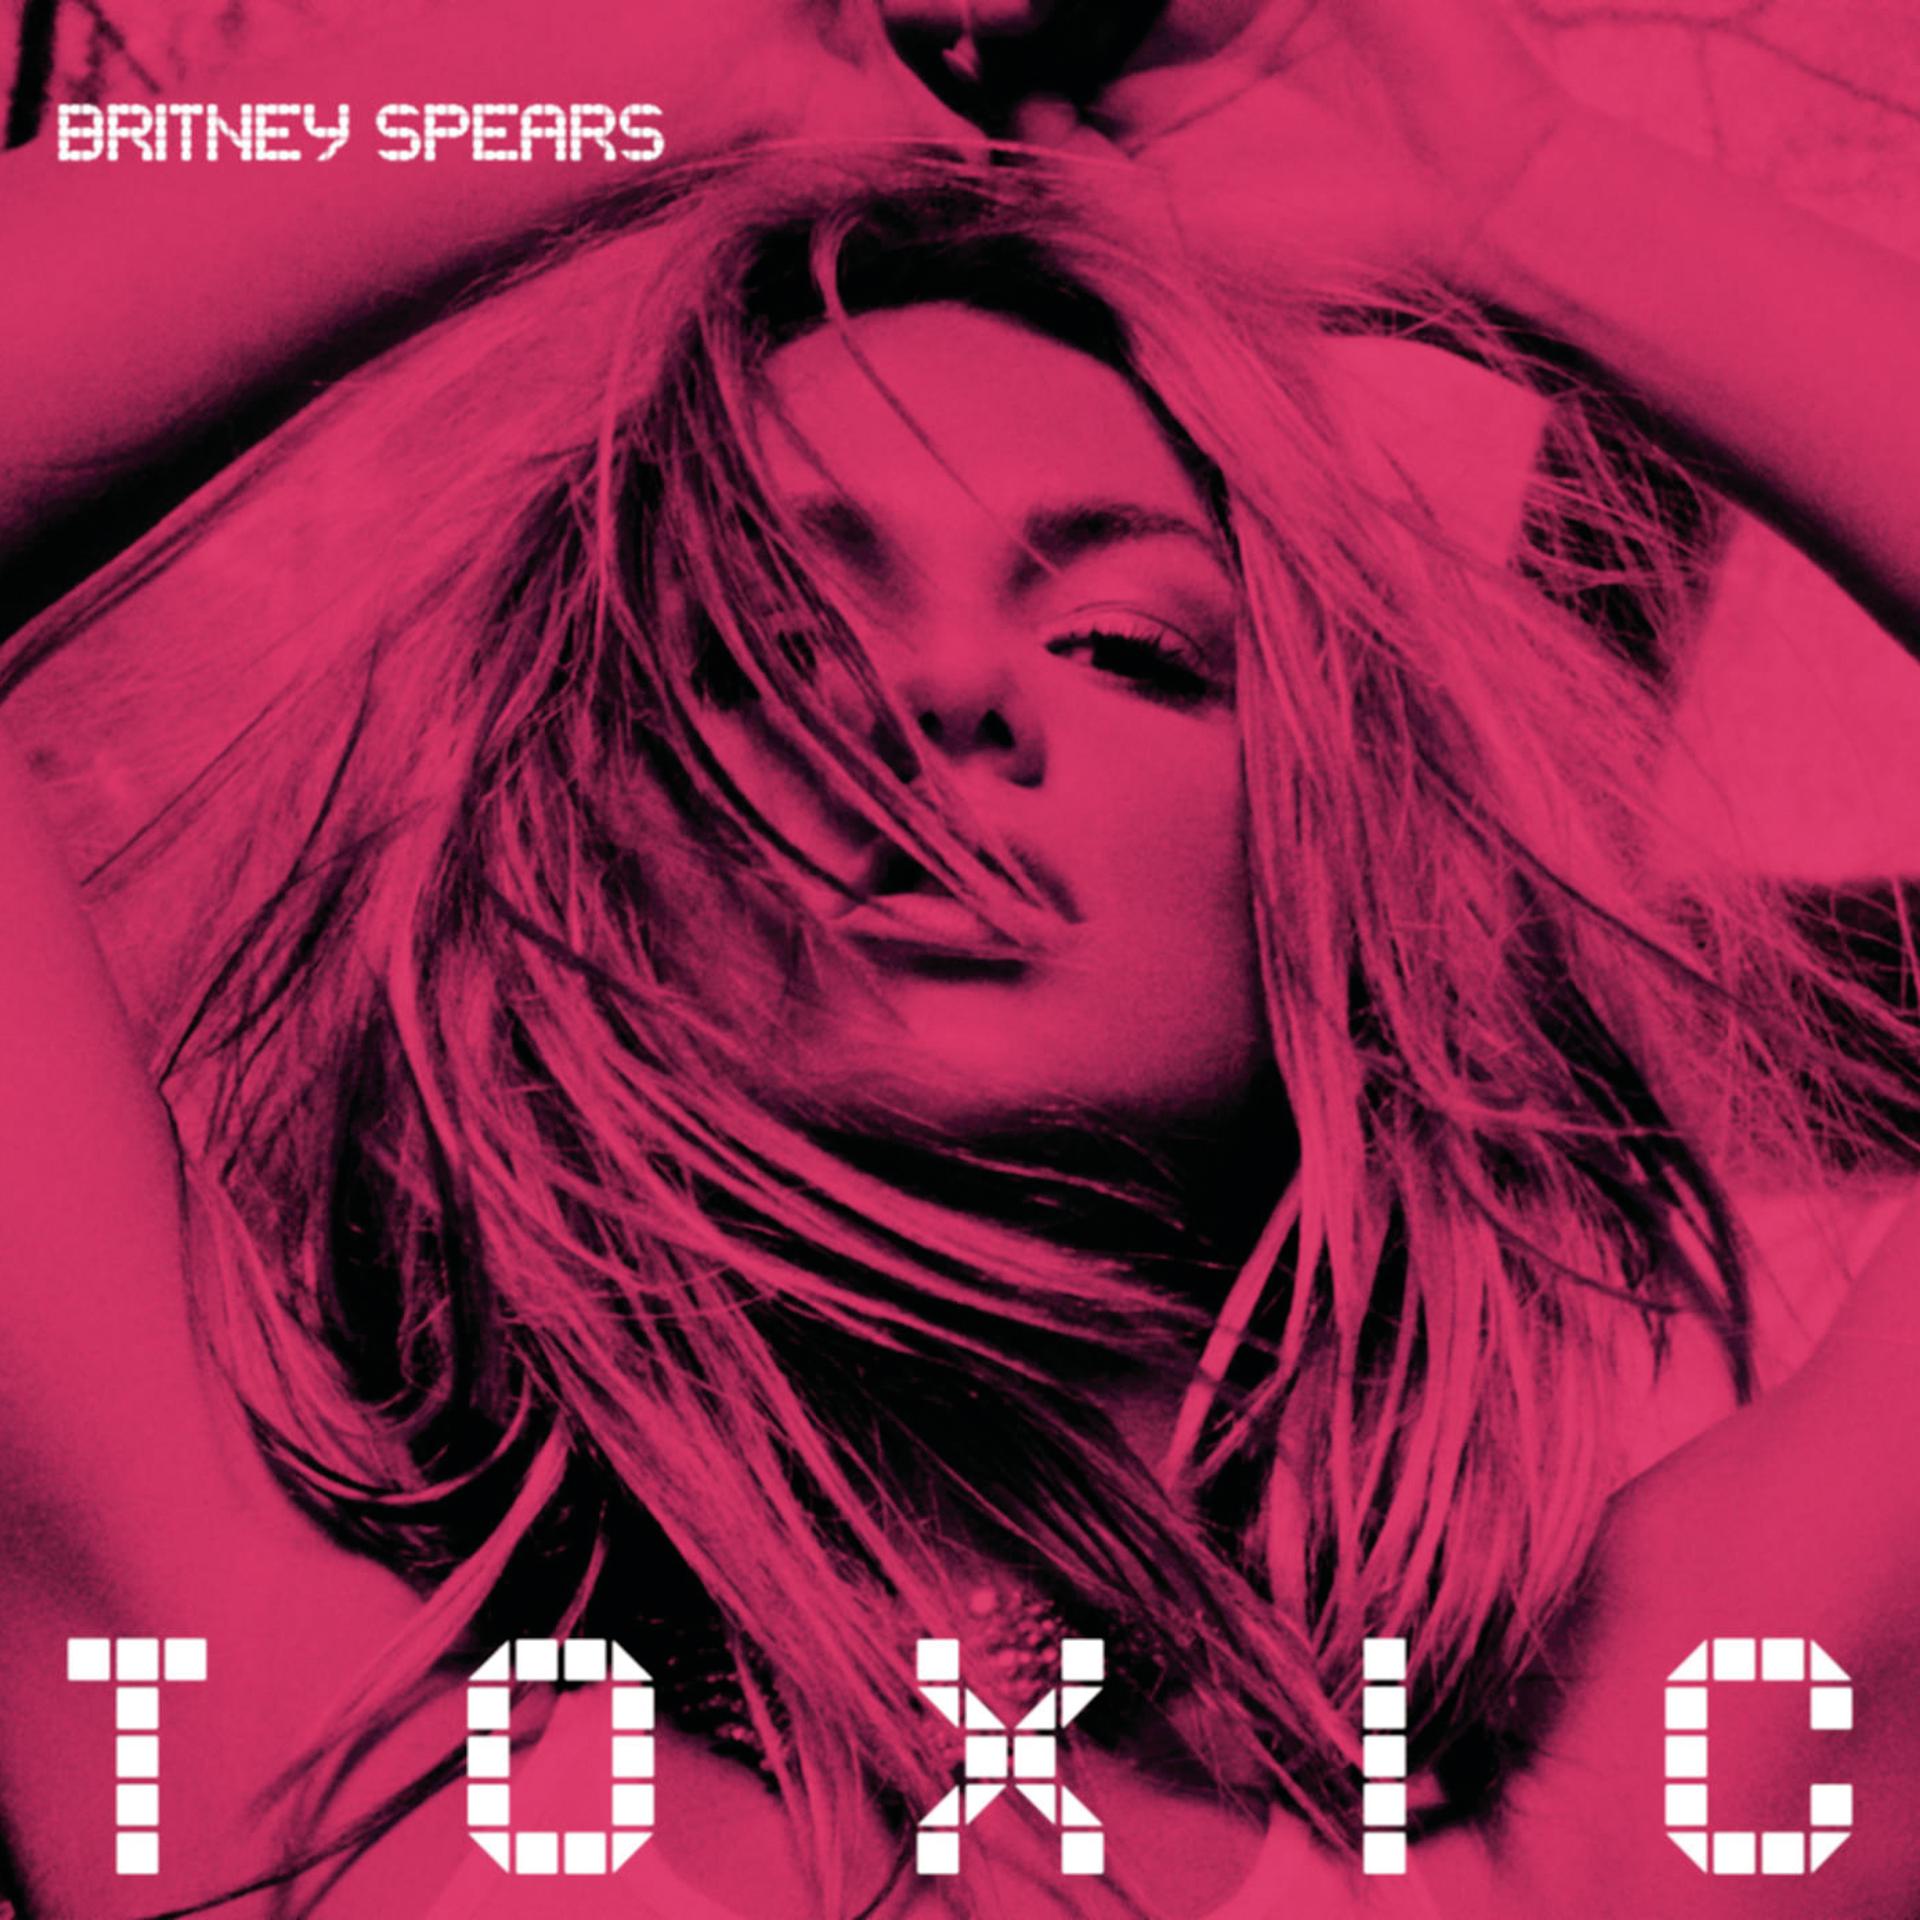 Toxic Бритни Спирс обложка. Britney Spears Toxic 2004. Бритни Спирс Токсик. Бритни Спирс обложка. Токсик песня спирс